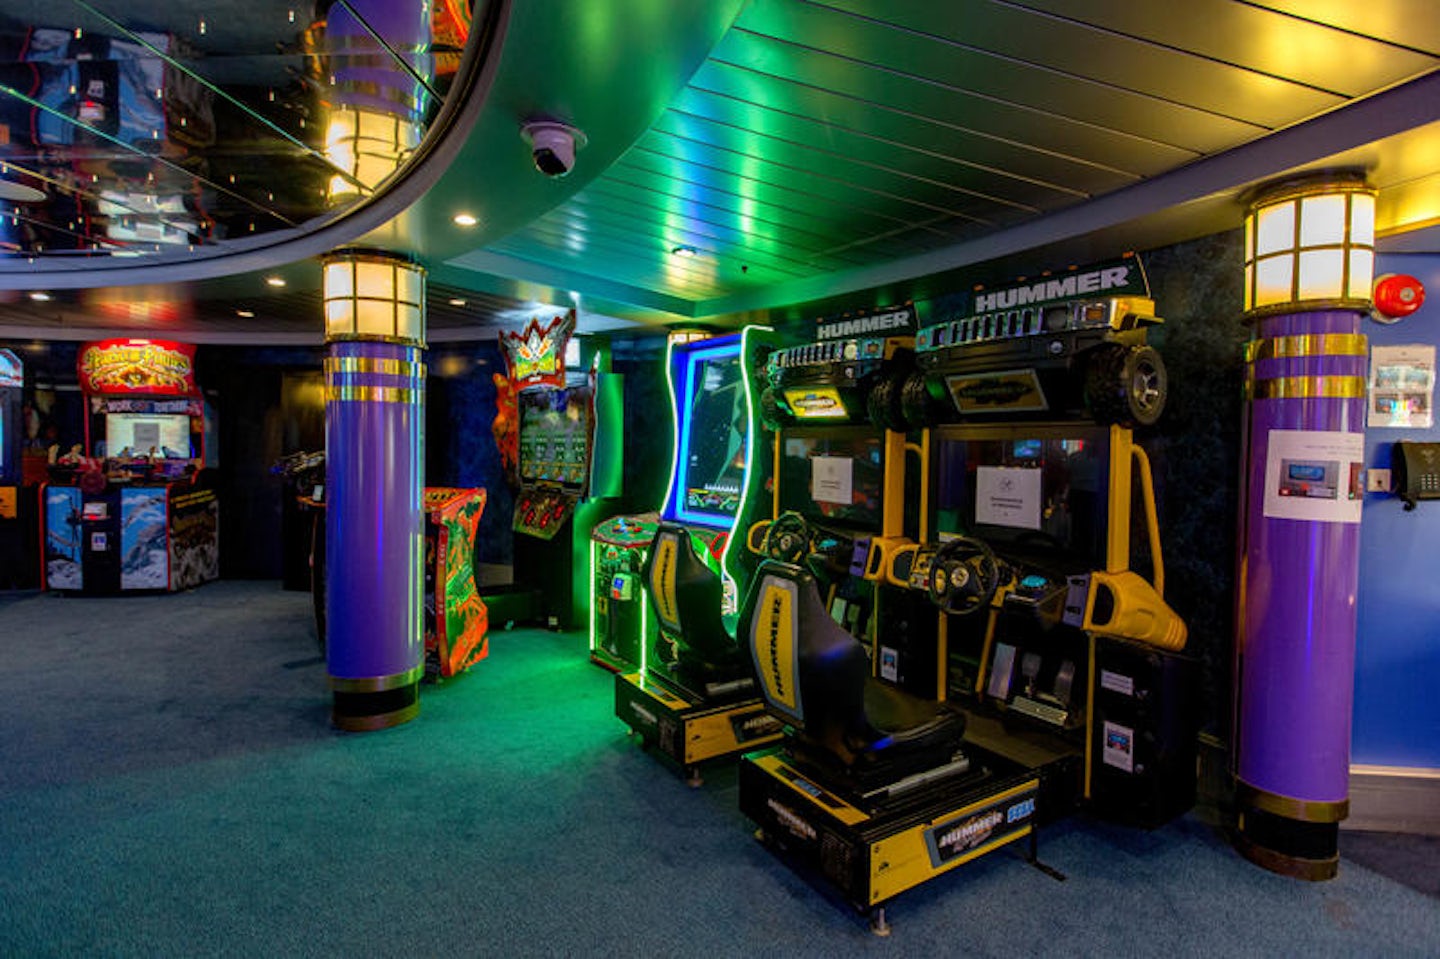 Video Arcade on Mariner of the Seas